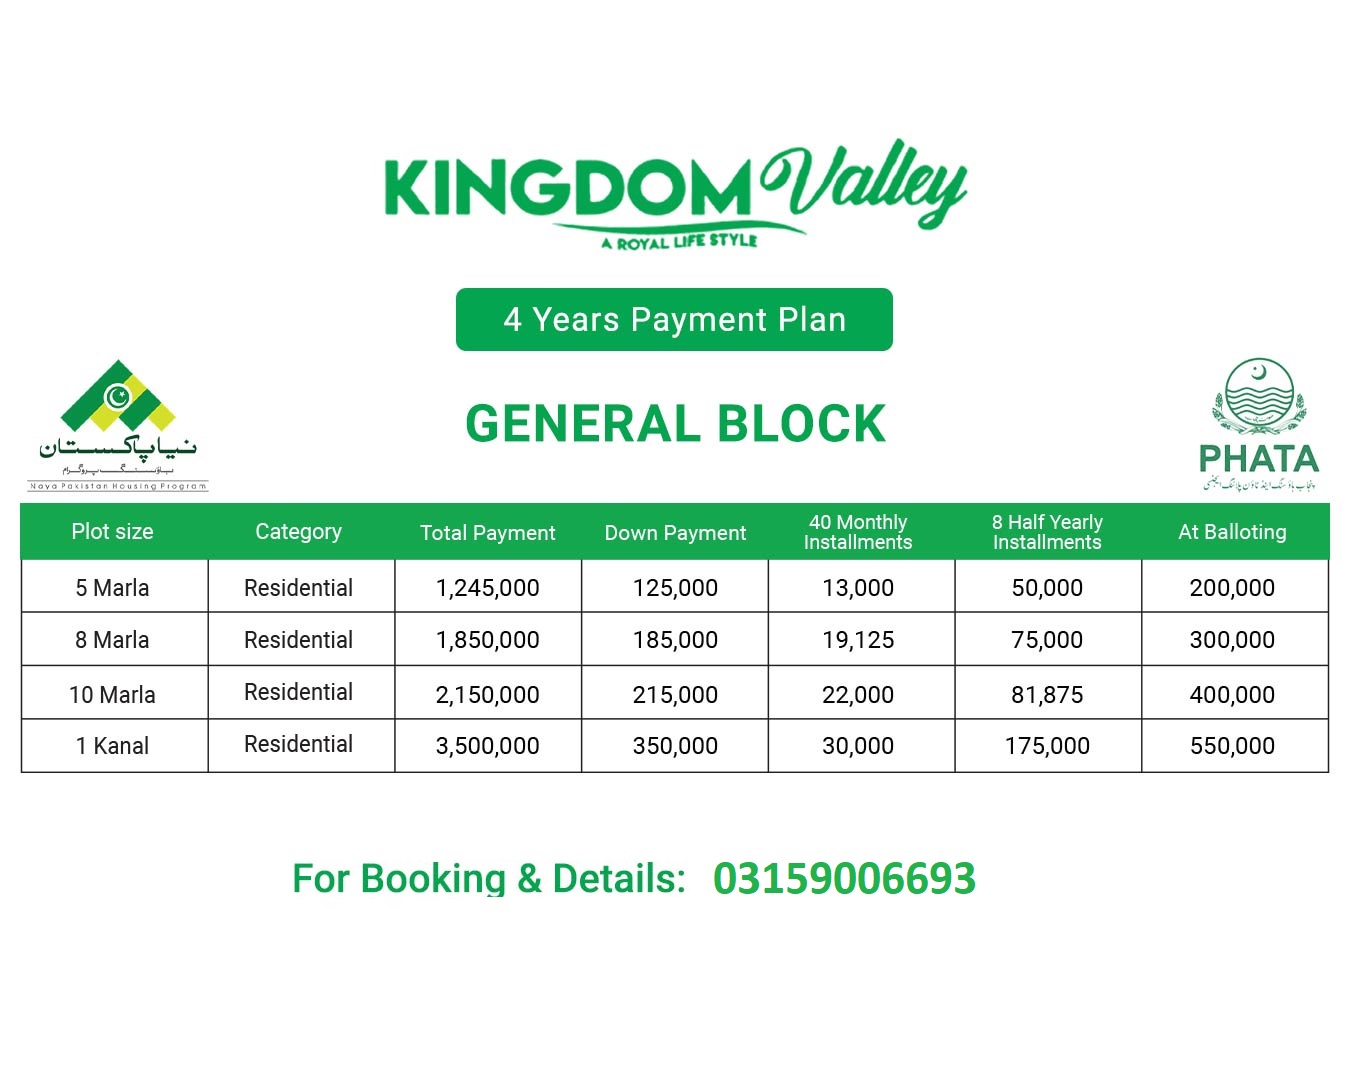 Kingdom valley general block payment plan